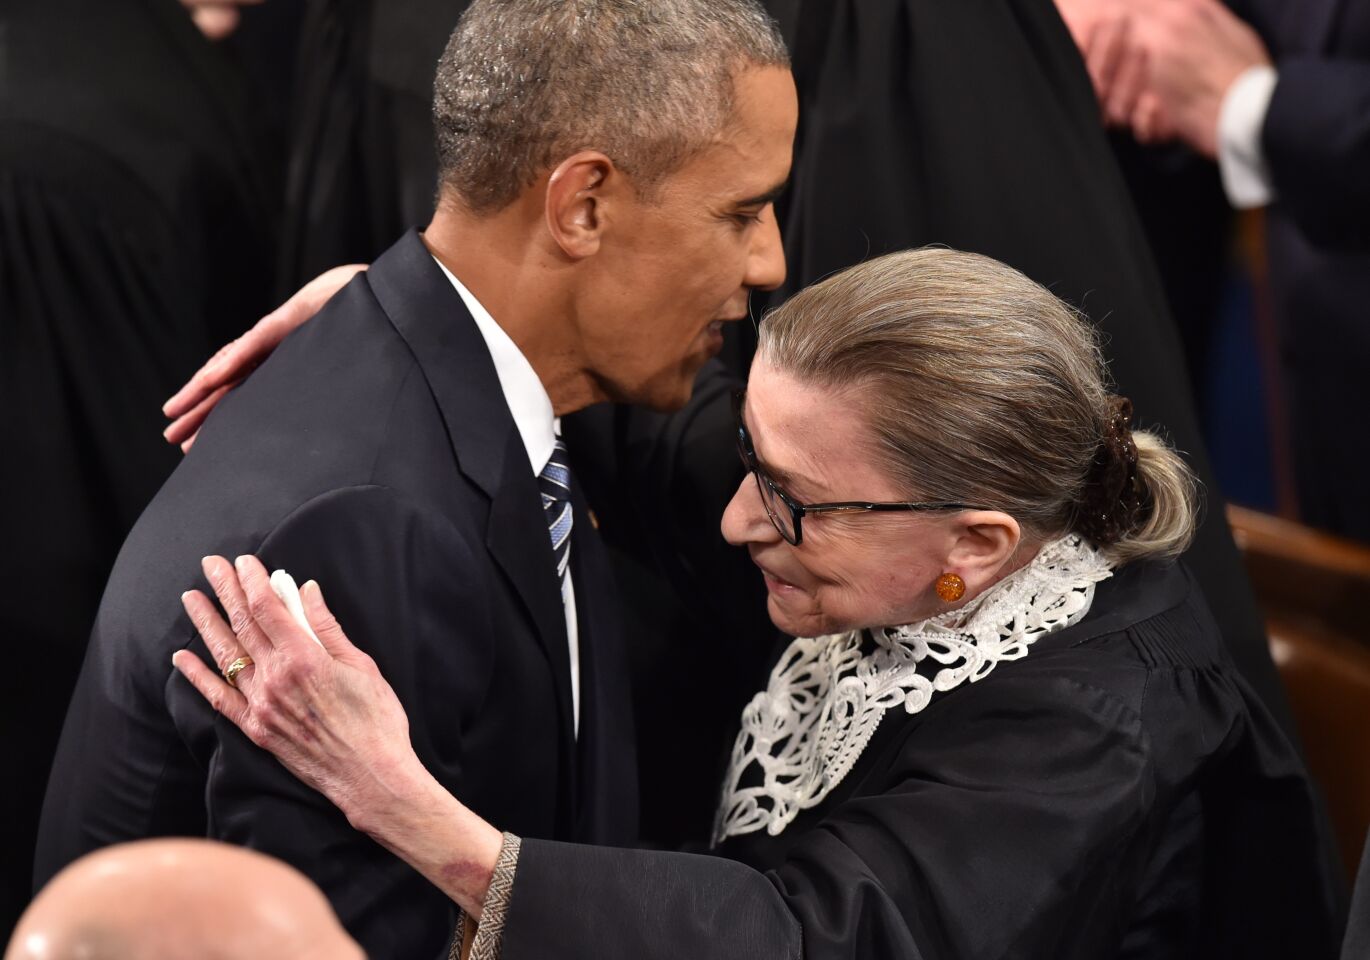 President Obama hugs Justice Ruth Bader Ginsburg